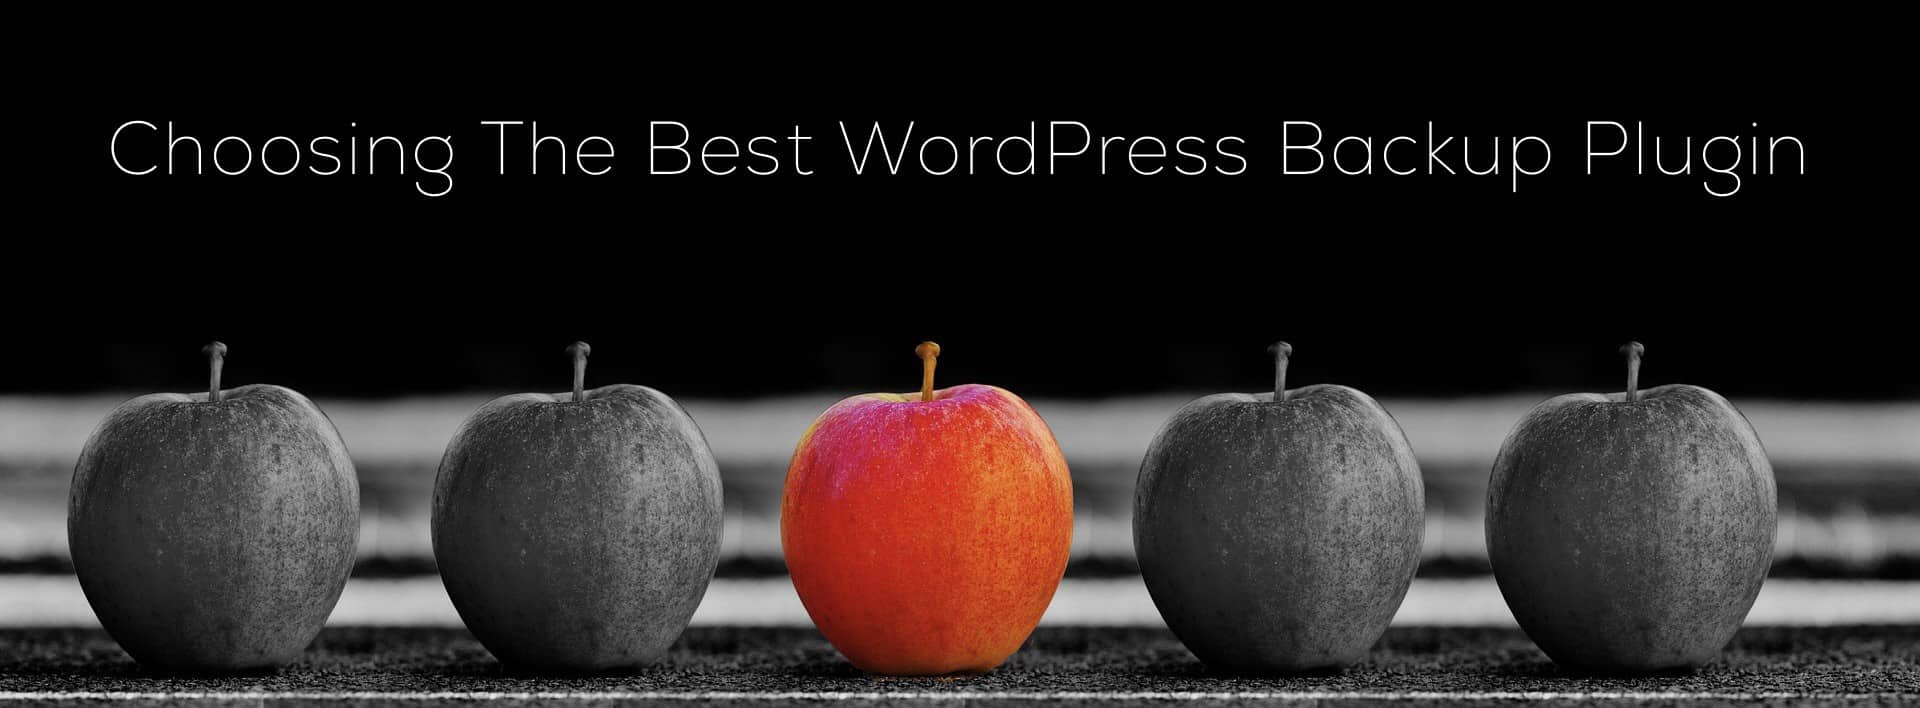 choosing best WordPress backup plugin